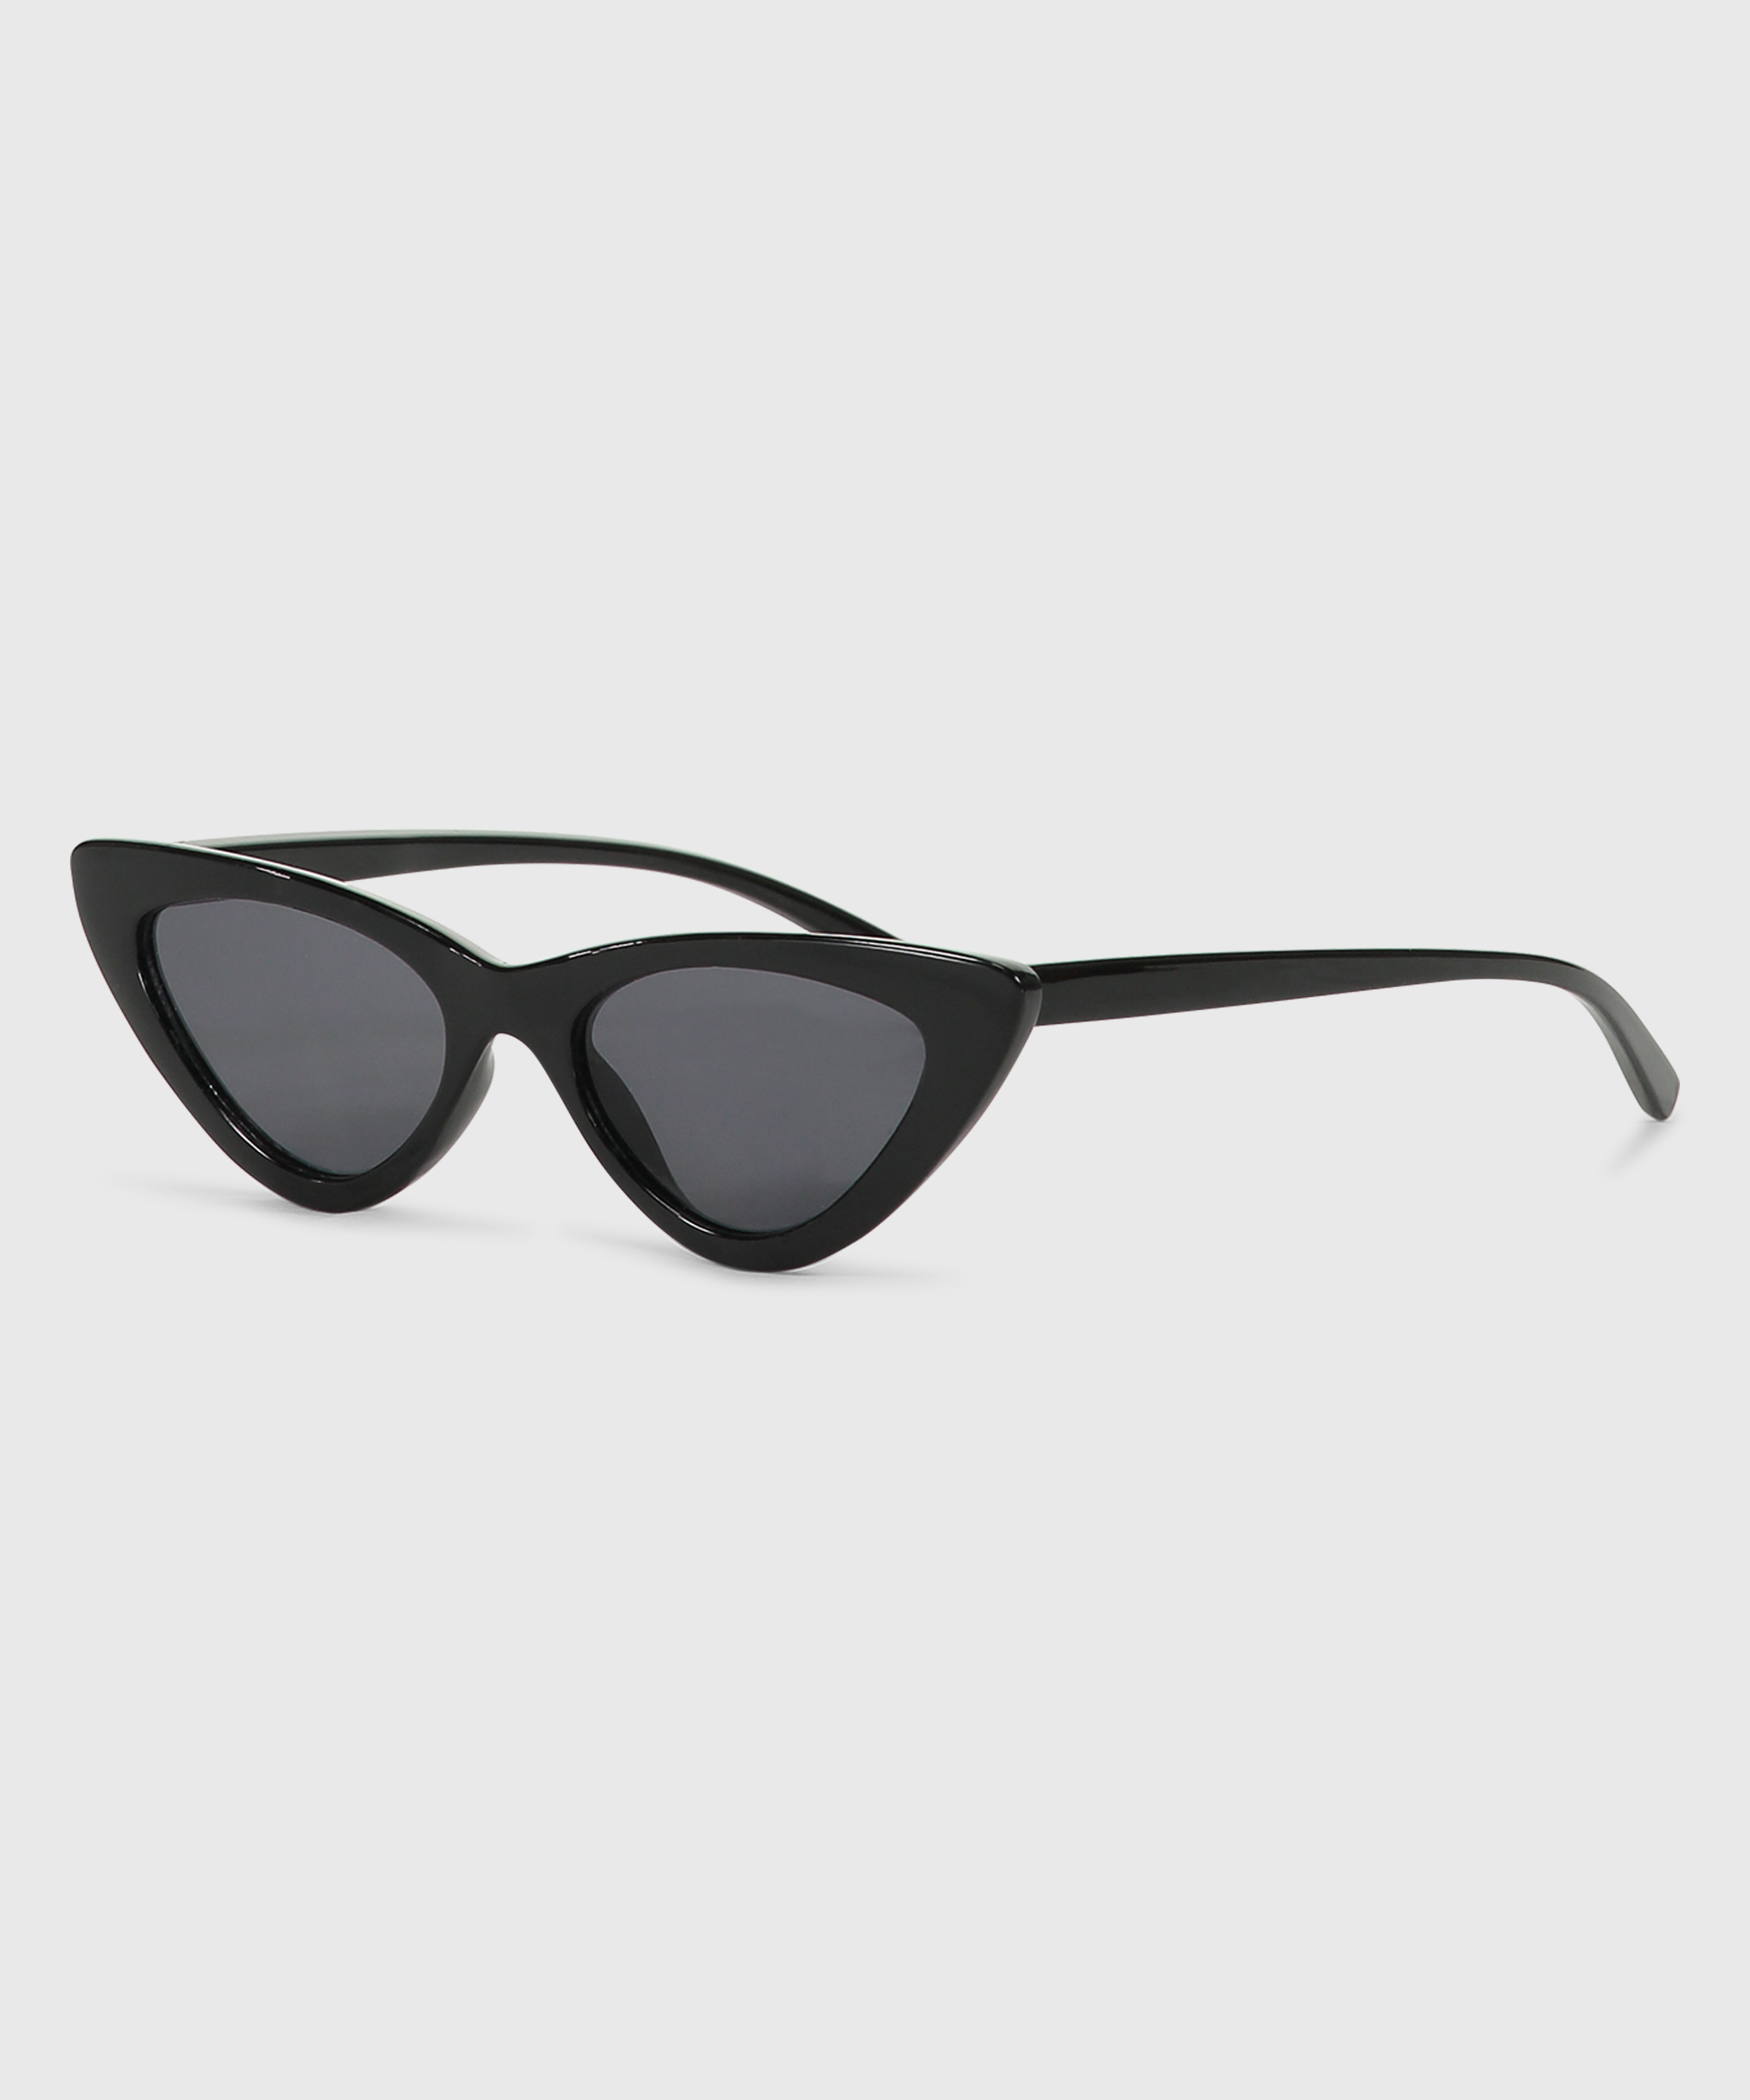 Sunglasses, Black, main